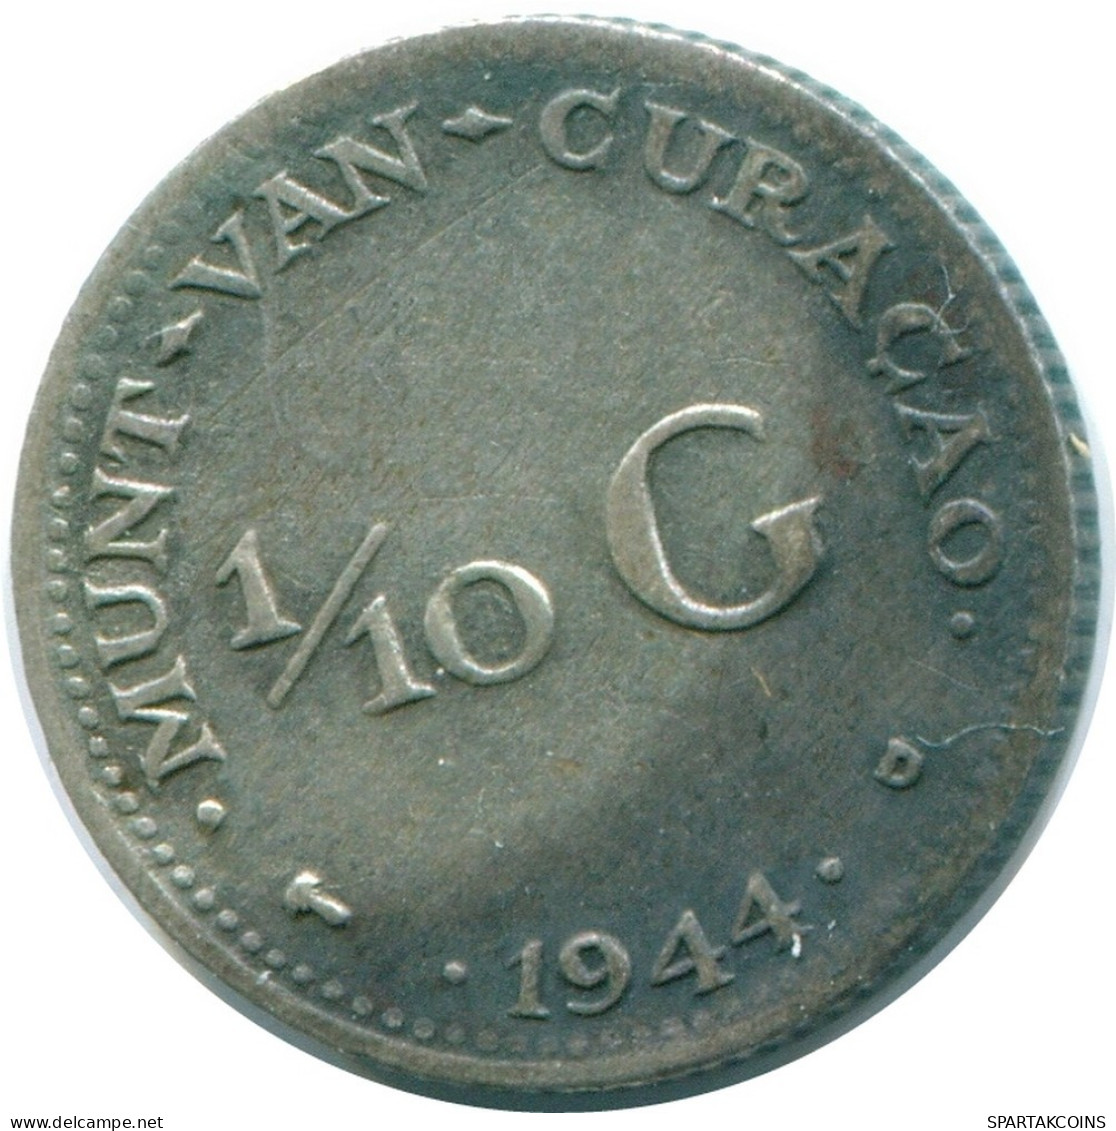 1/10 GULDEN 1944 CURACAO NIEDERLANDE SILBER Koloniale Münze #NL11756.3.D.A - Curacao